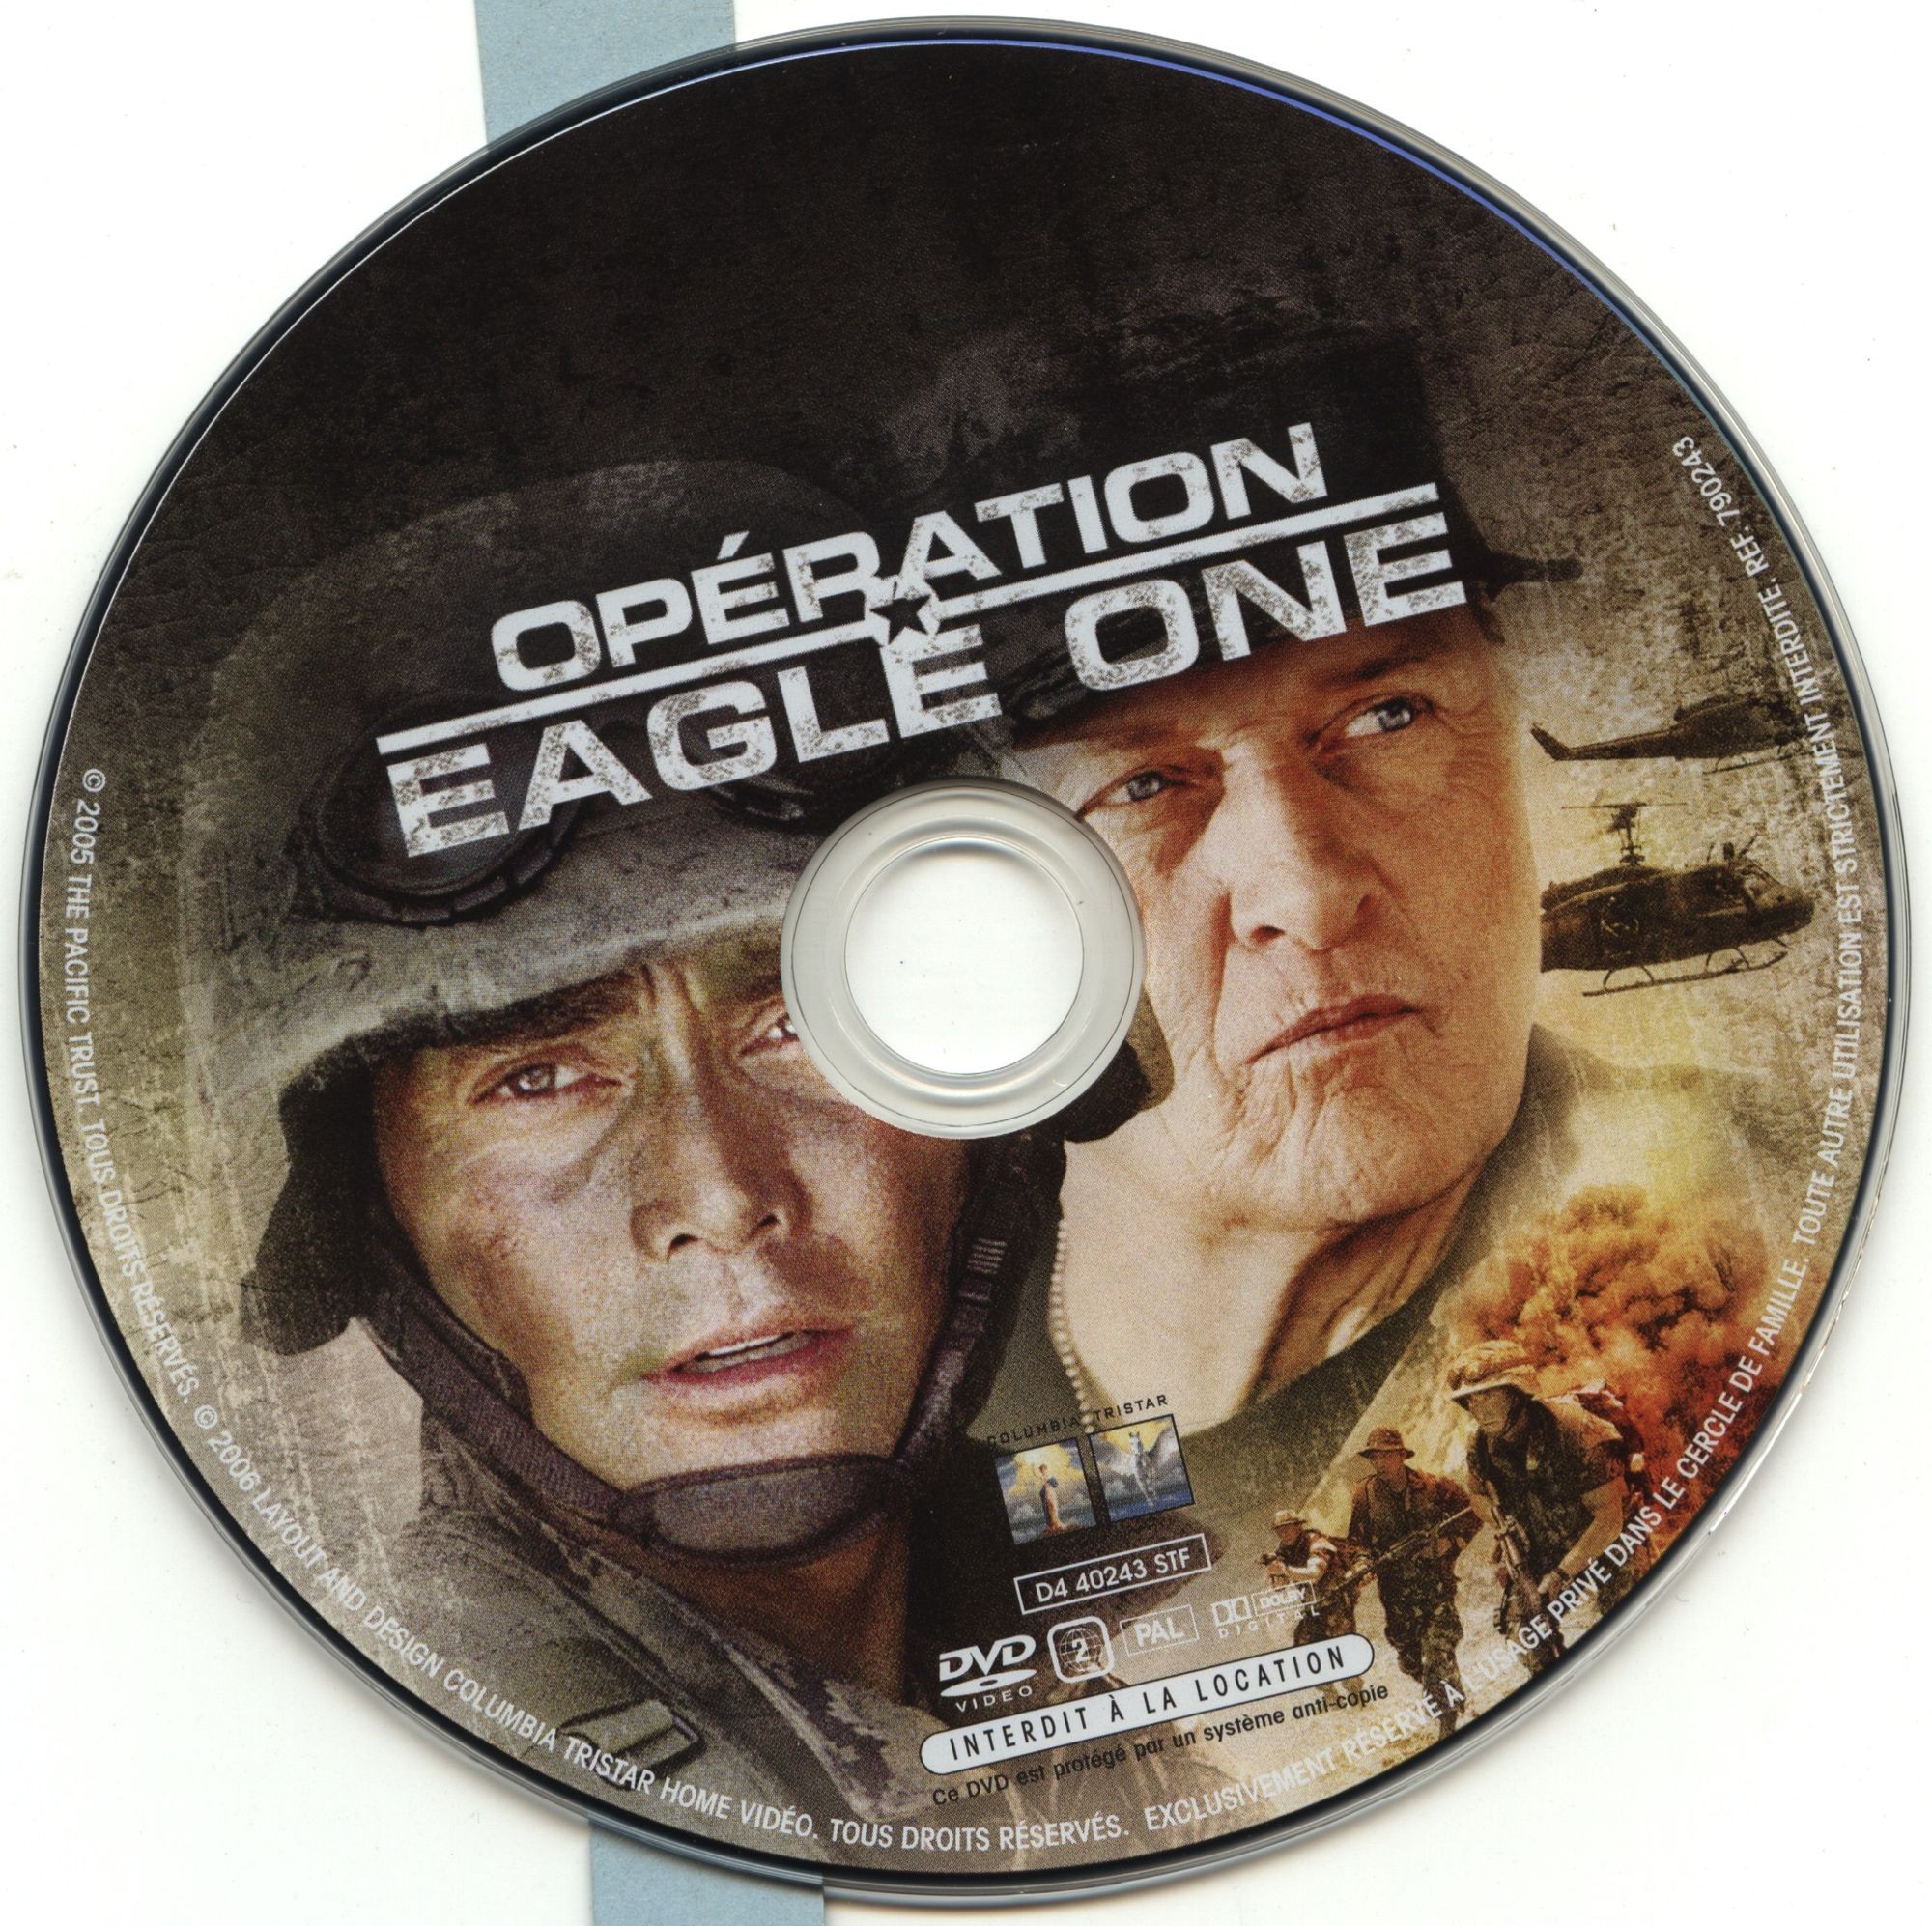 Operation eagle one